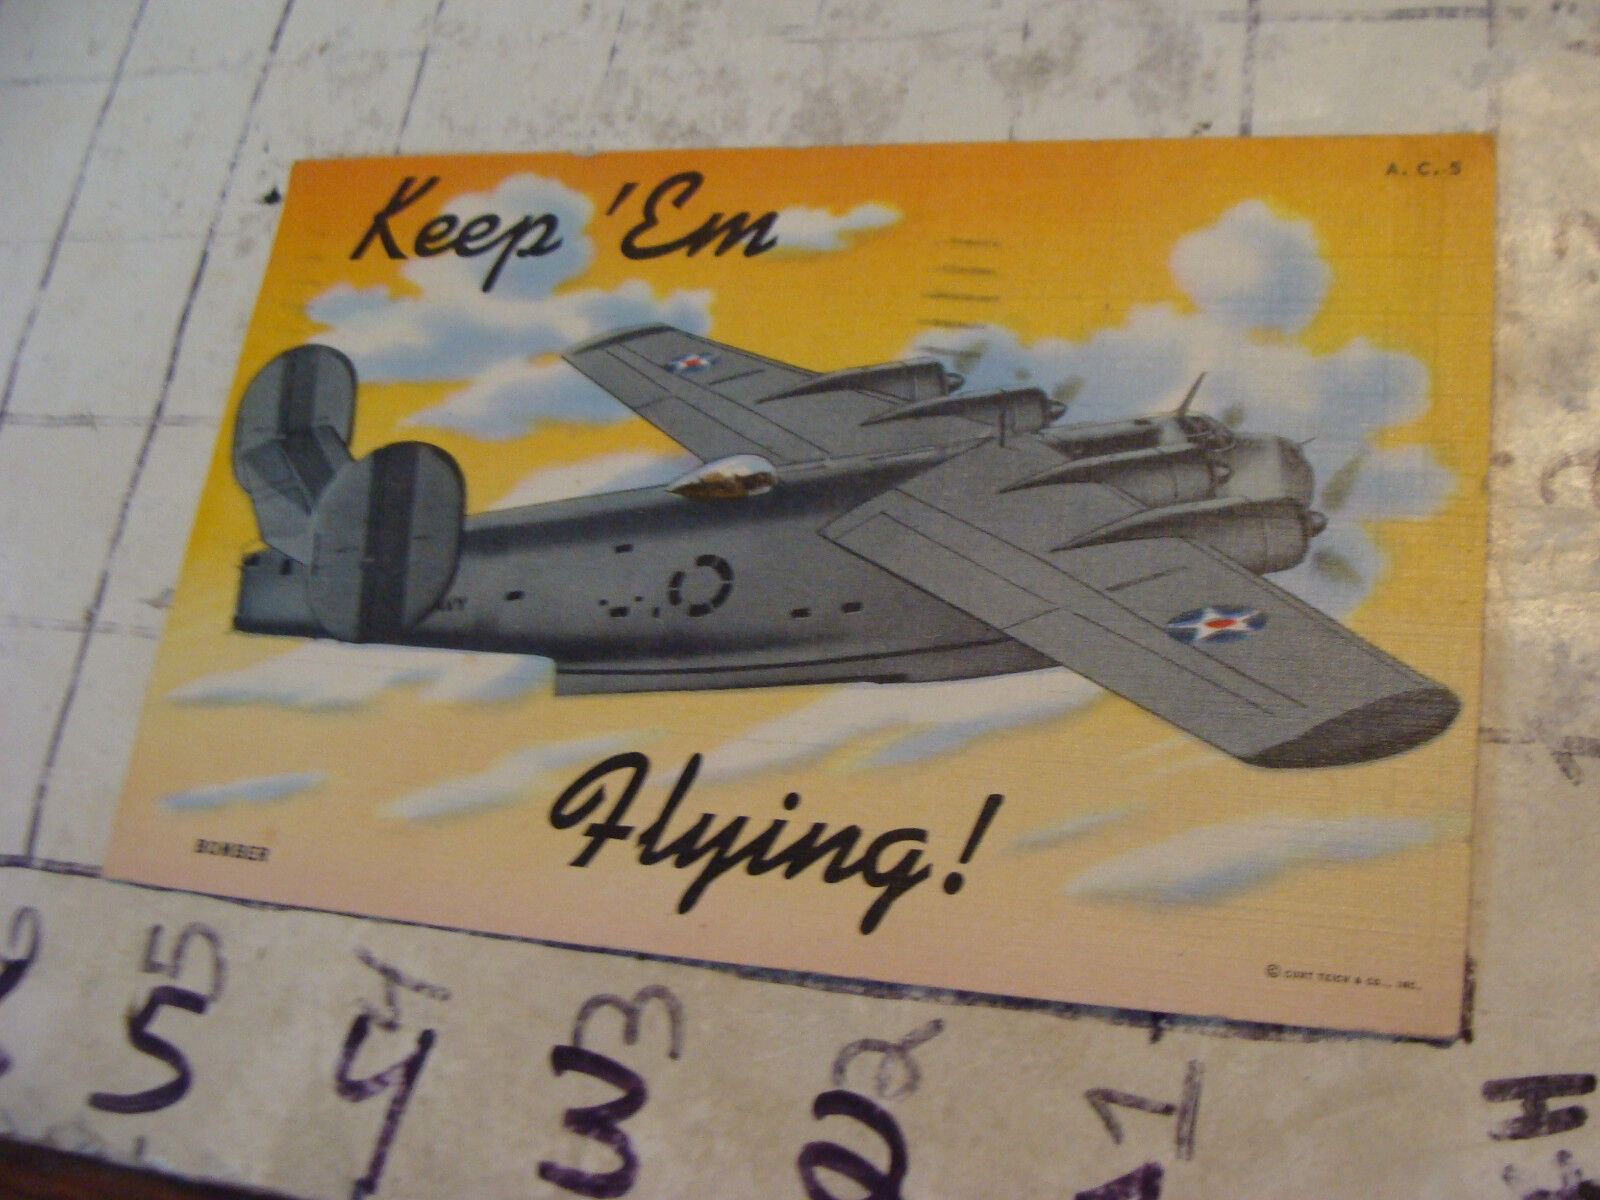 Orig Vint post card 1940's KEEP EM FLYING, airplane